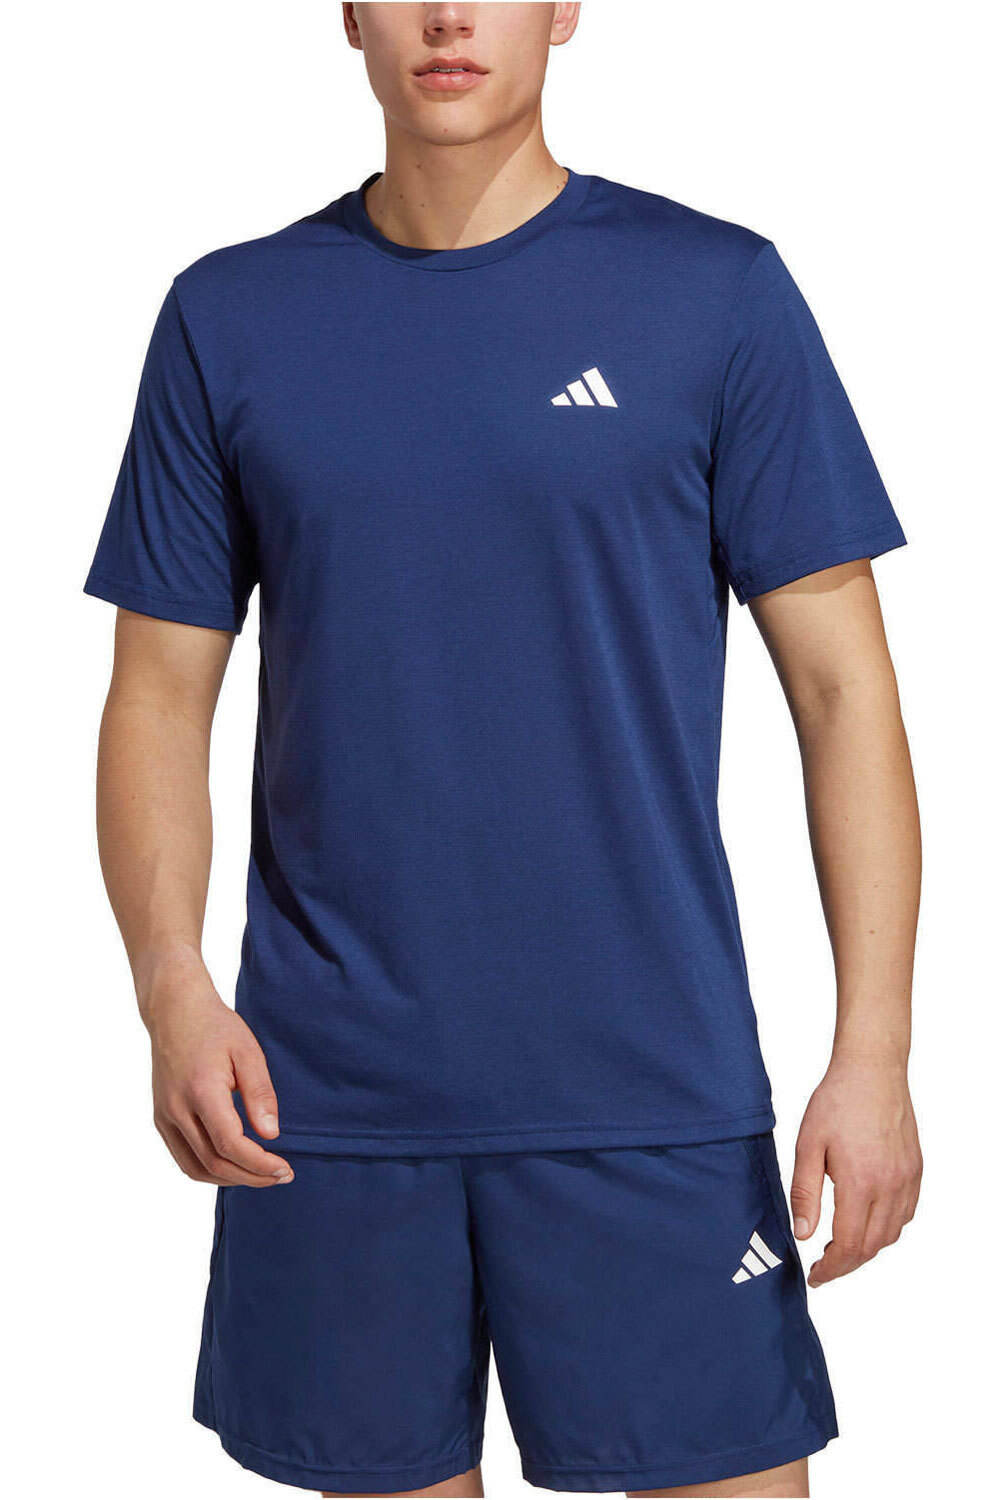 adidas camiseta fitness hombre Train Essentials Comfort Training vista frontal